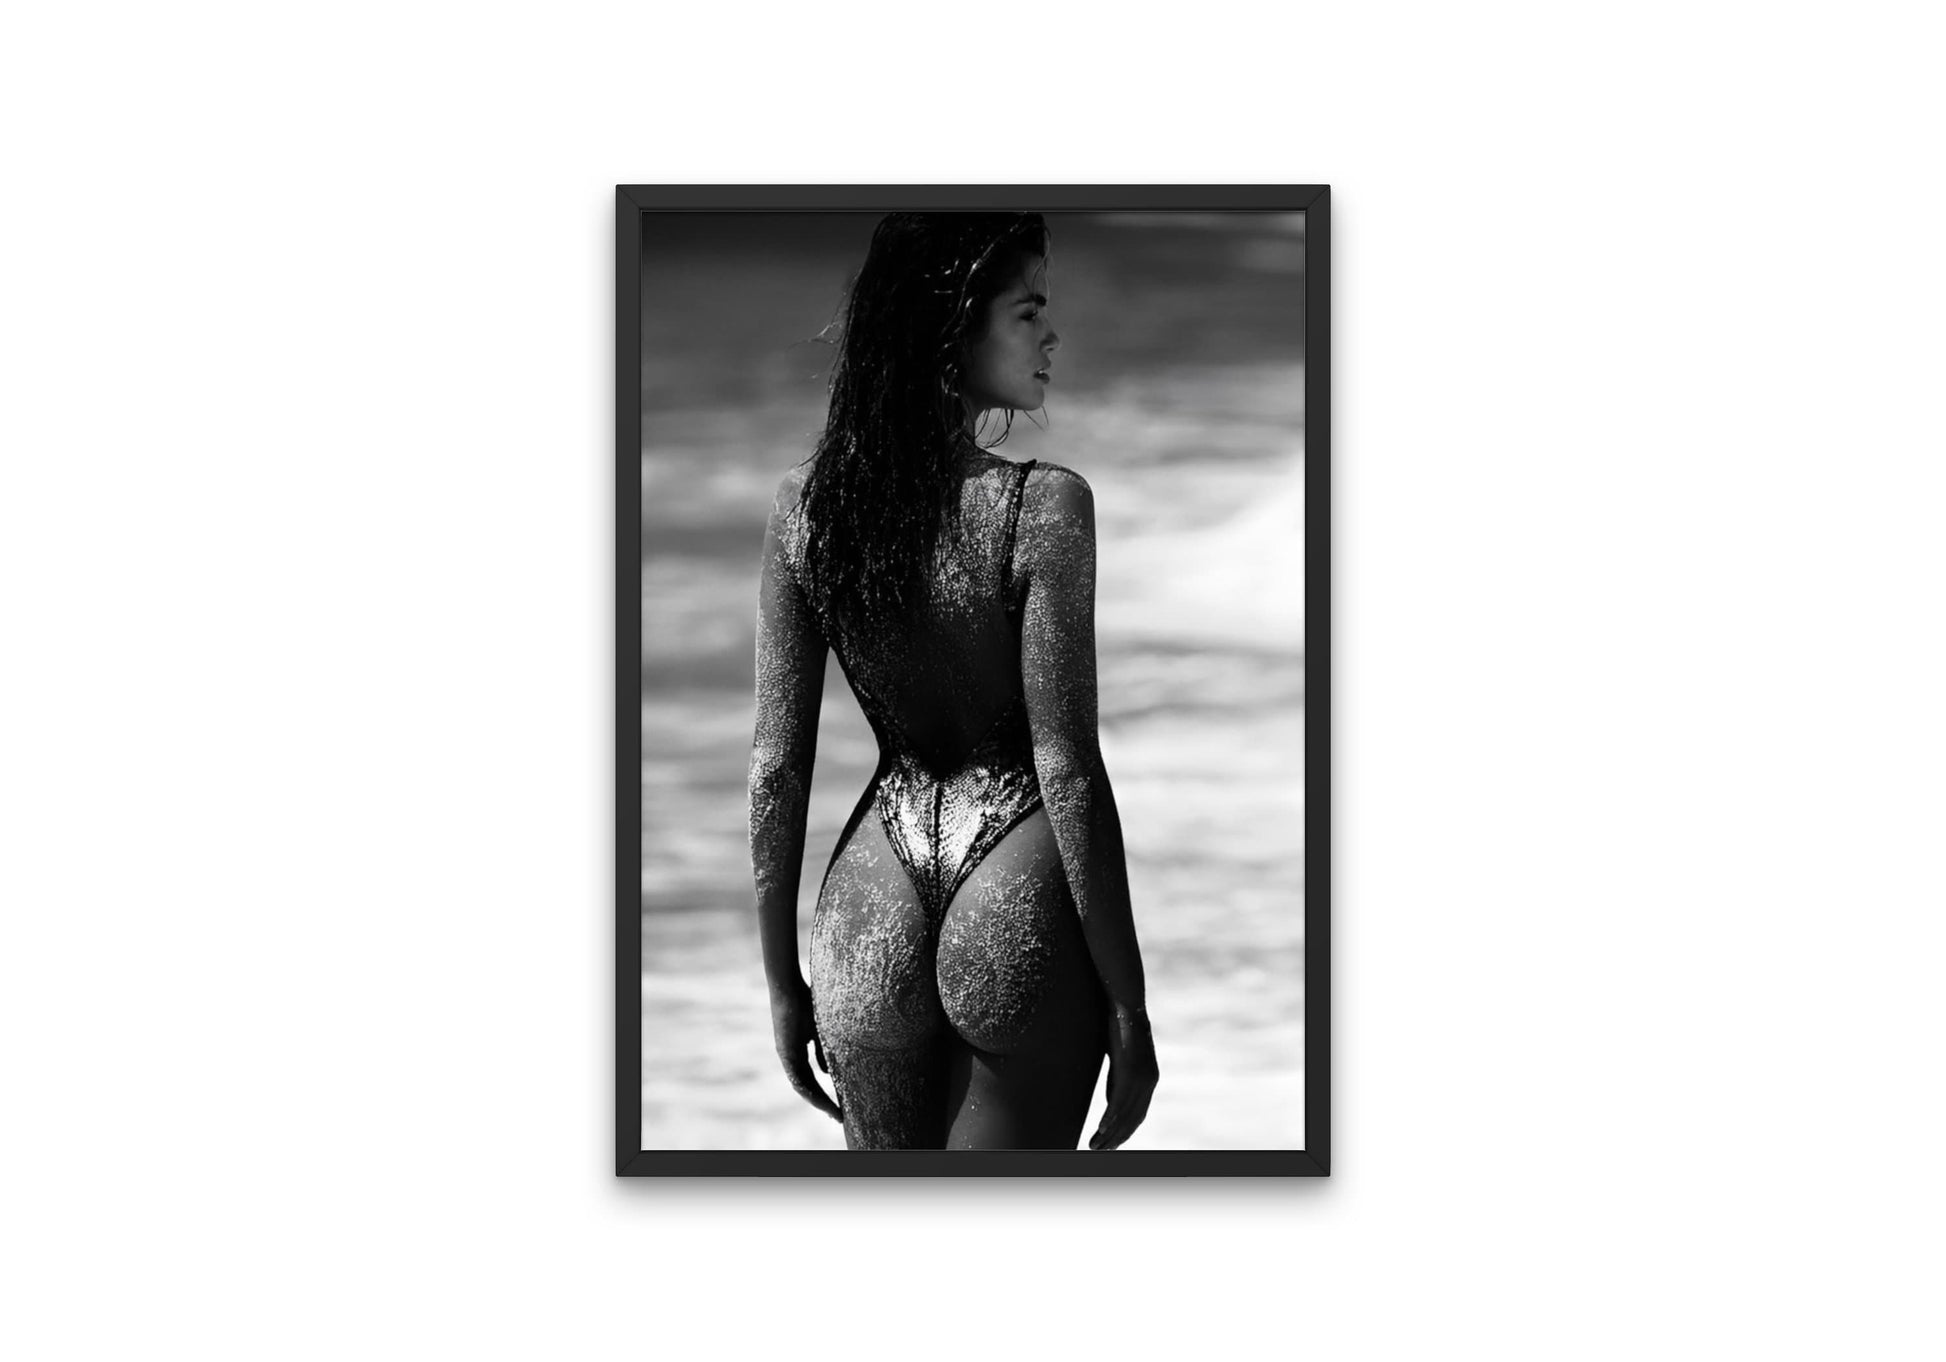 Black and White Bikini Model Poster PRINTABLE, Marco Glaviano Cindy Crawford 1989, Fashion posters, B&W Fashion Photography, Dapper Voguish